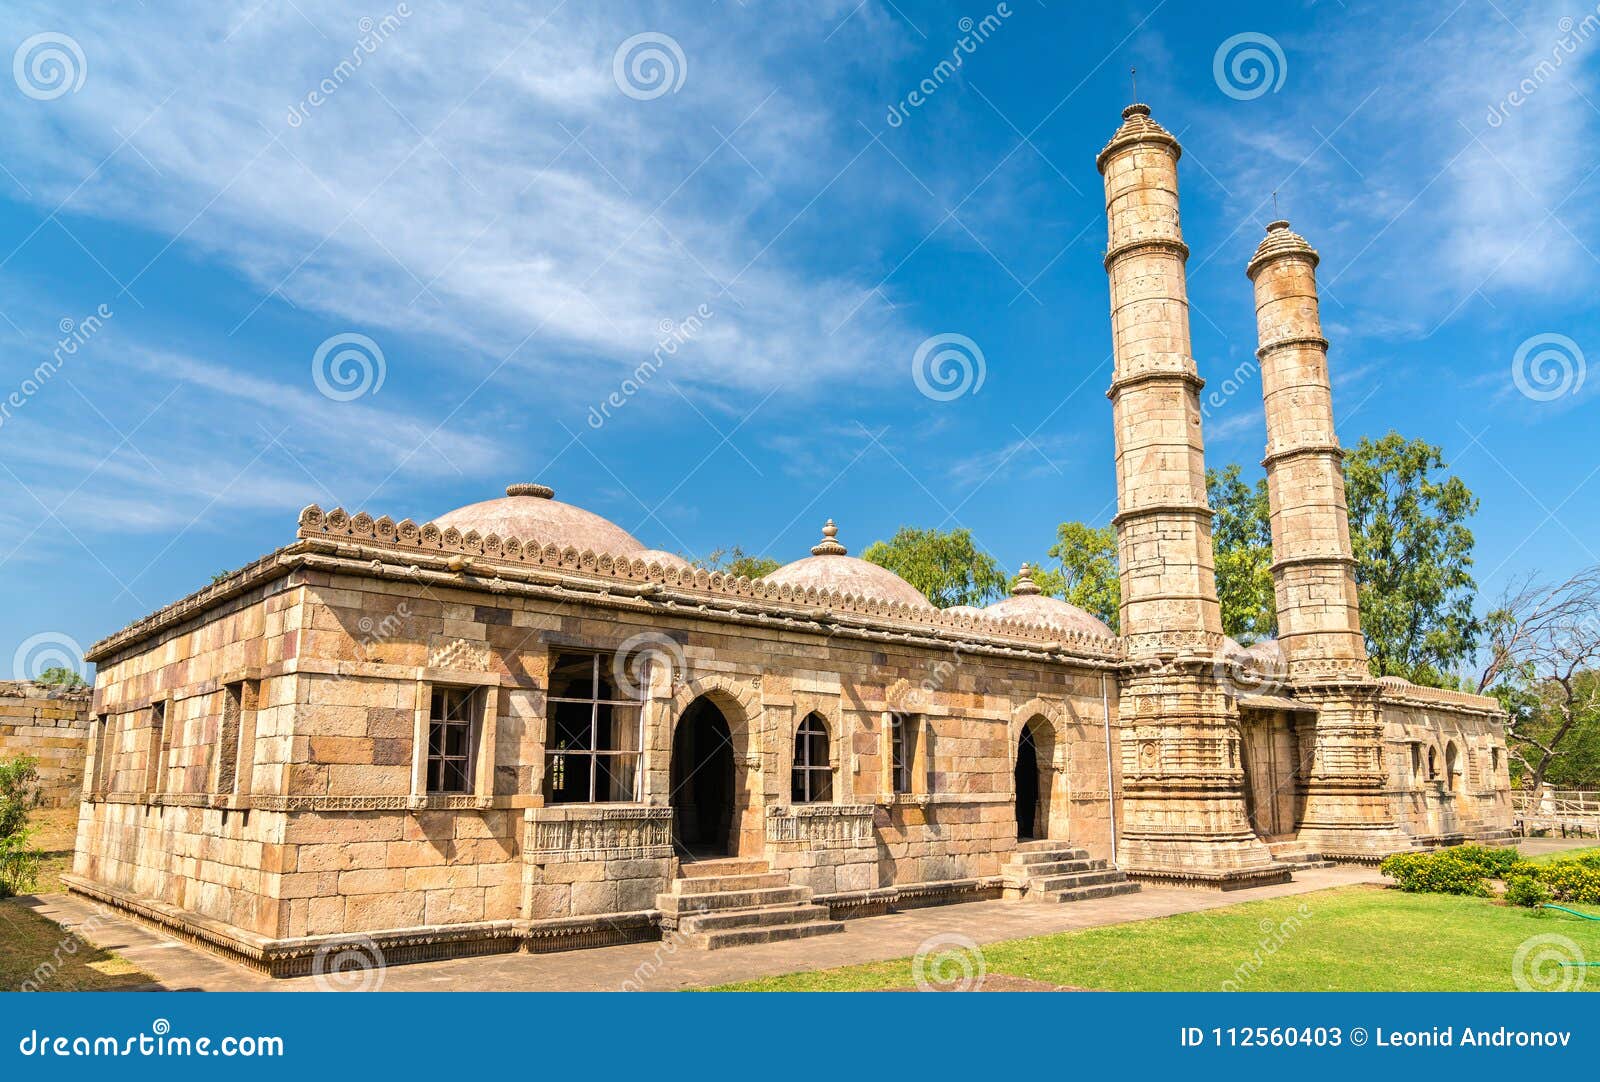 sahar ki masjid at champaner-pavagadh archaeological park. a unesco heritage site in gujarat, india